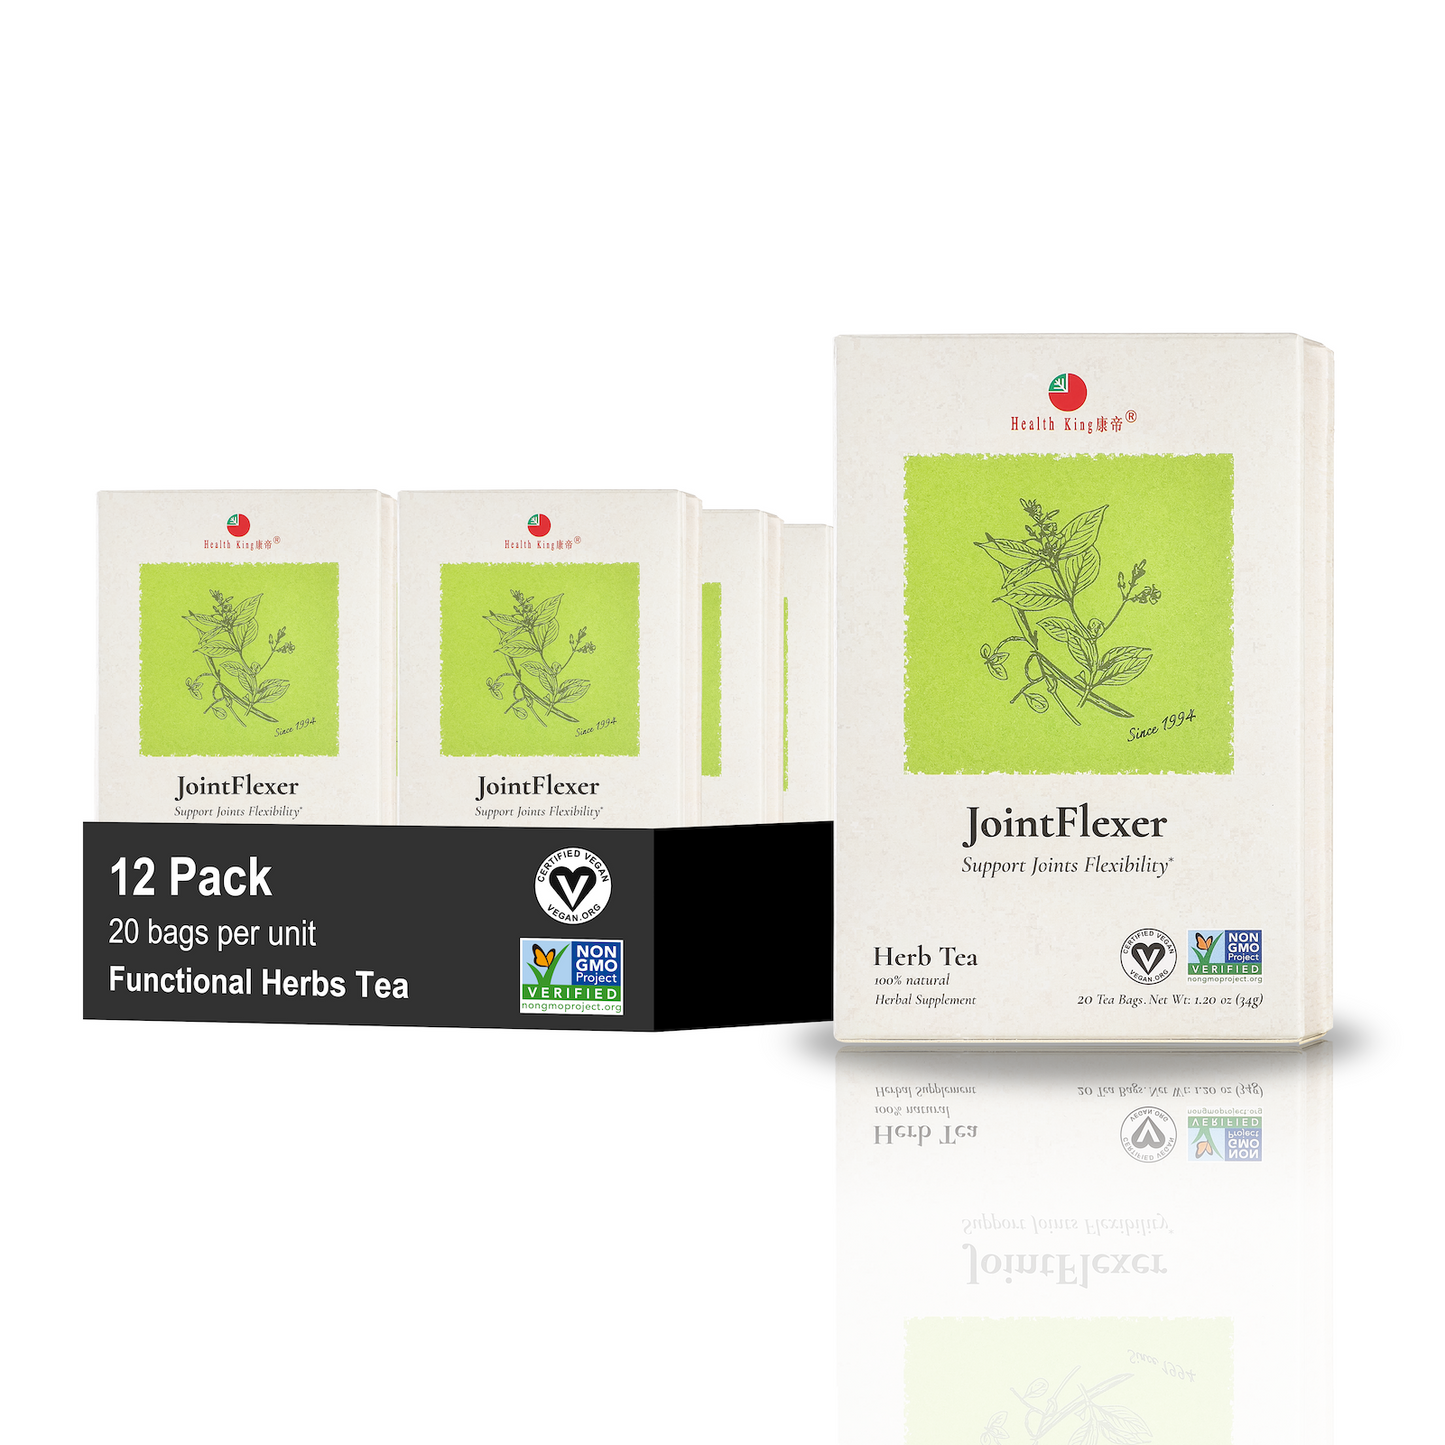 Twelve-pack set of JointFlexer Herb Tea, formulated for joint flexibility